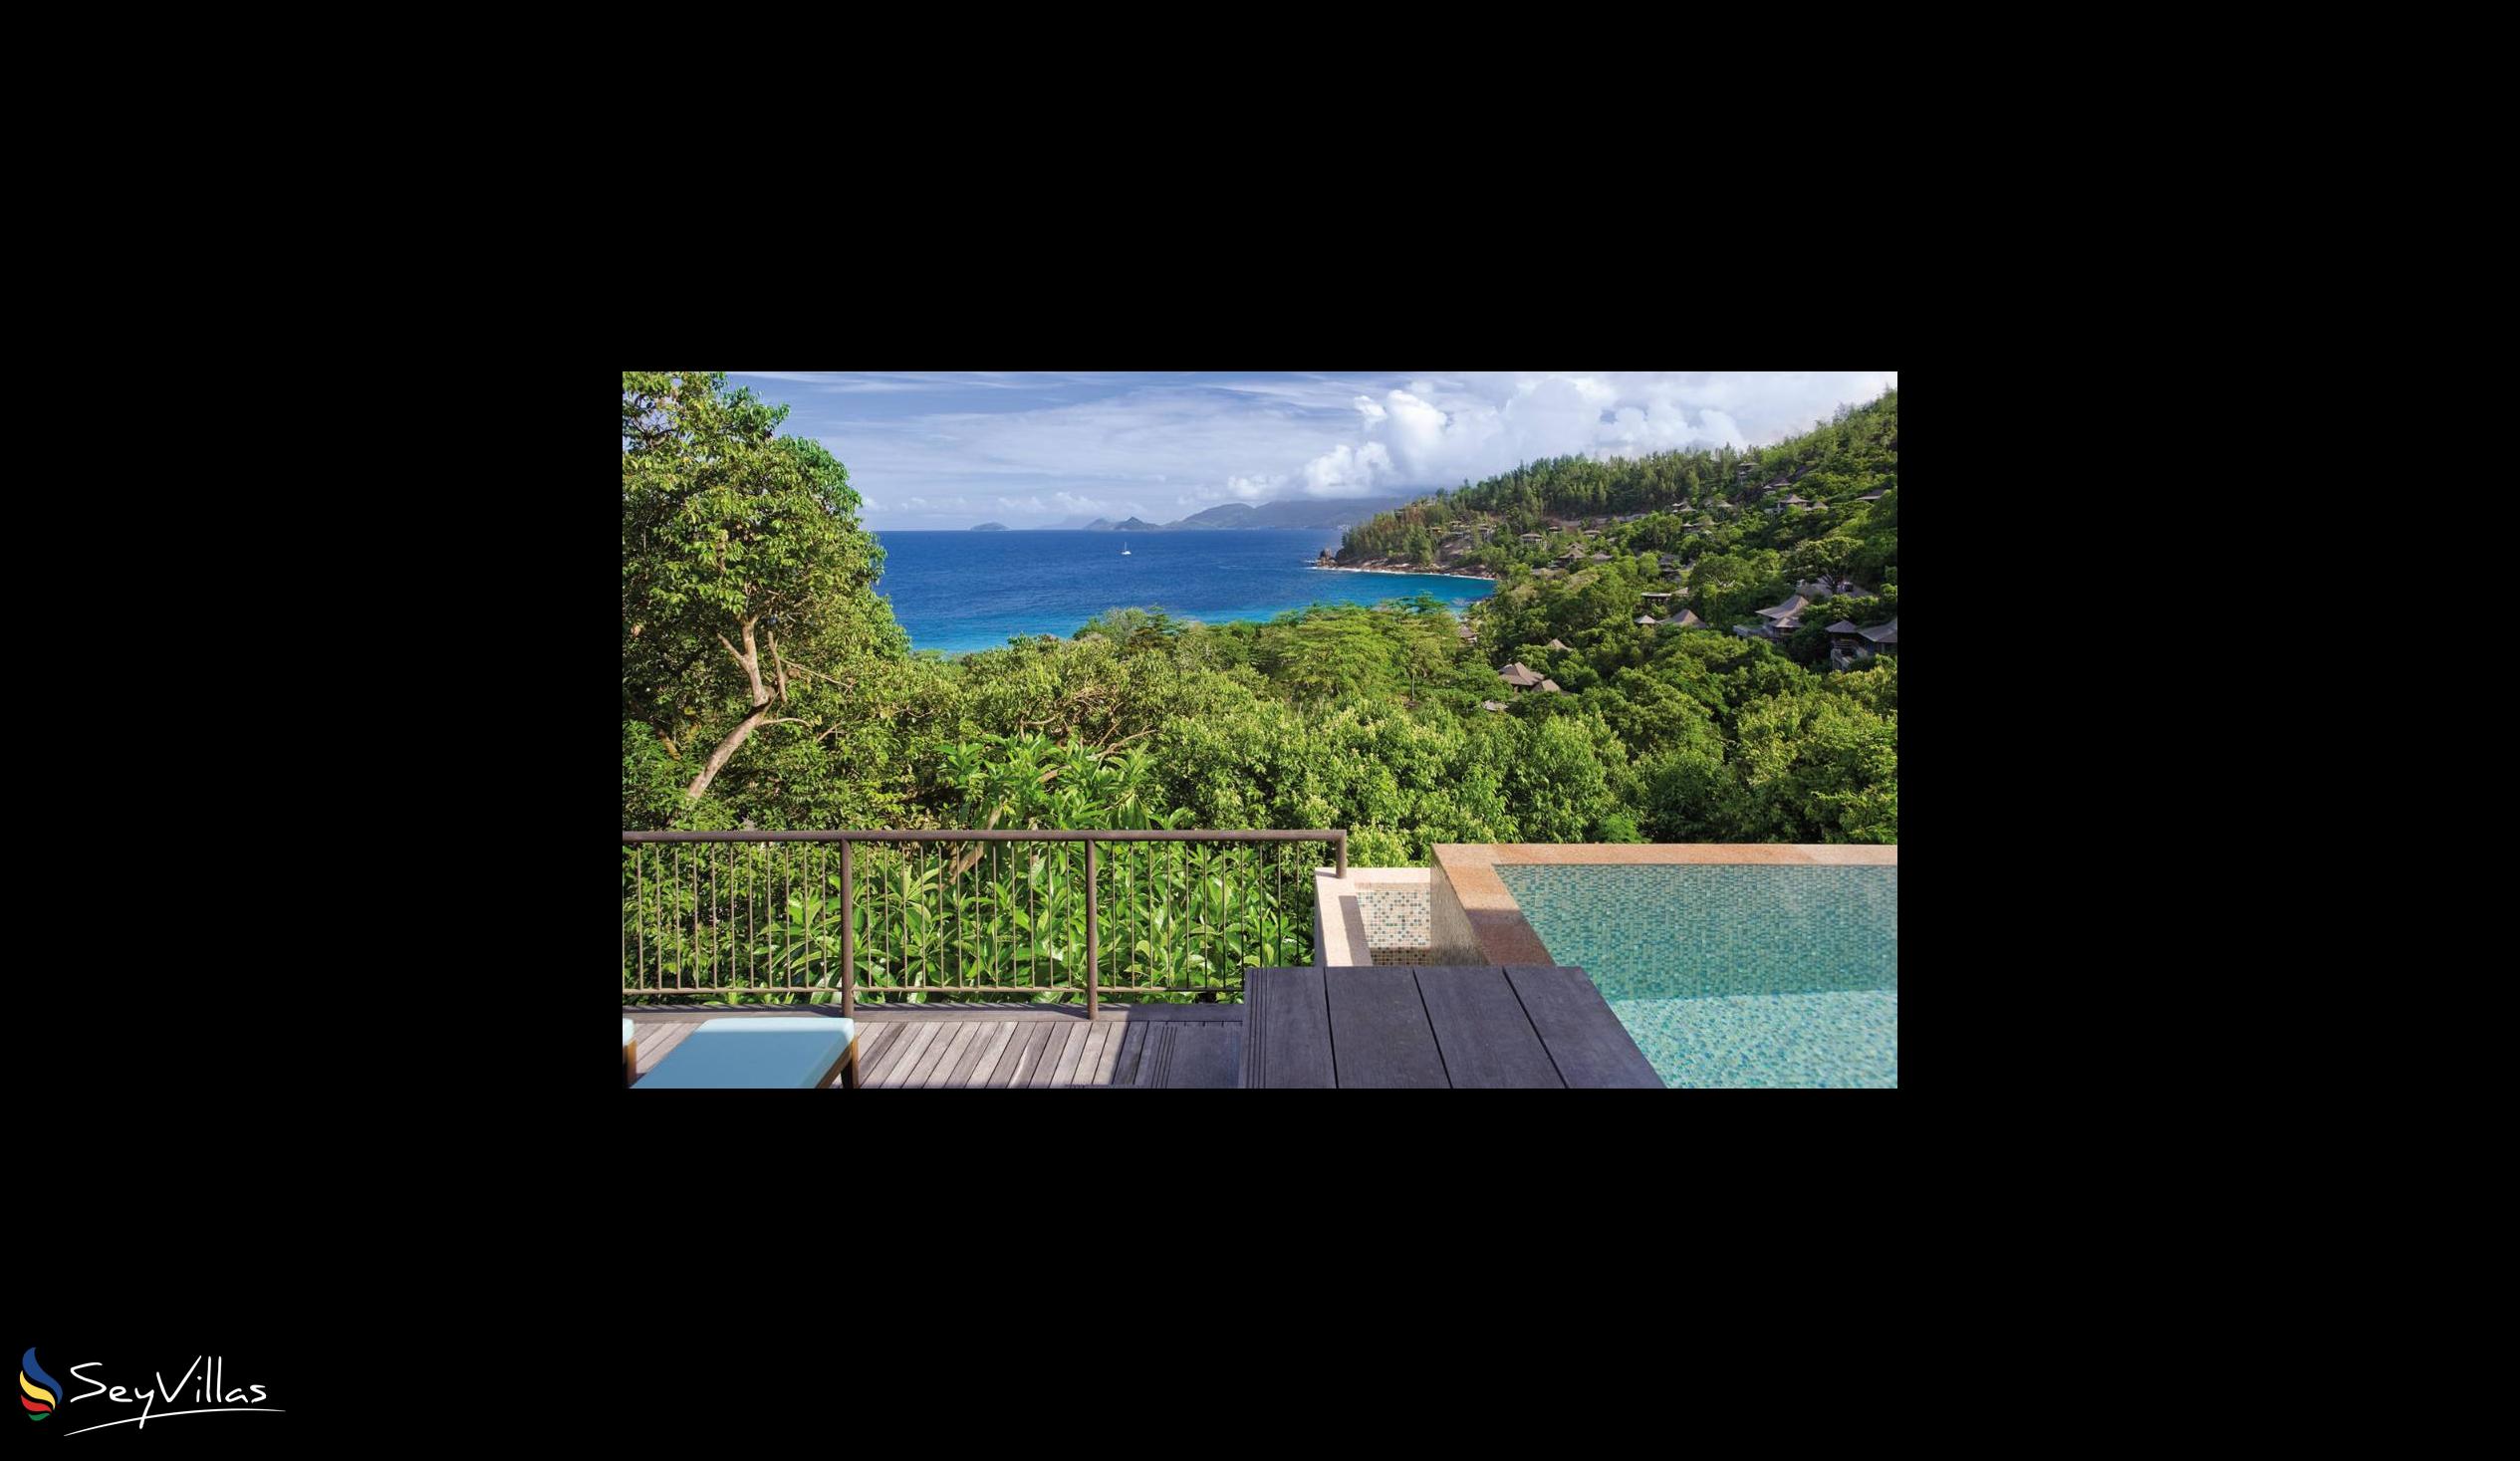 Photo 42: Four Seasons Resort - Hilltop Ocean View Villa - Mahé (Seychelles)